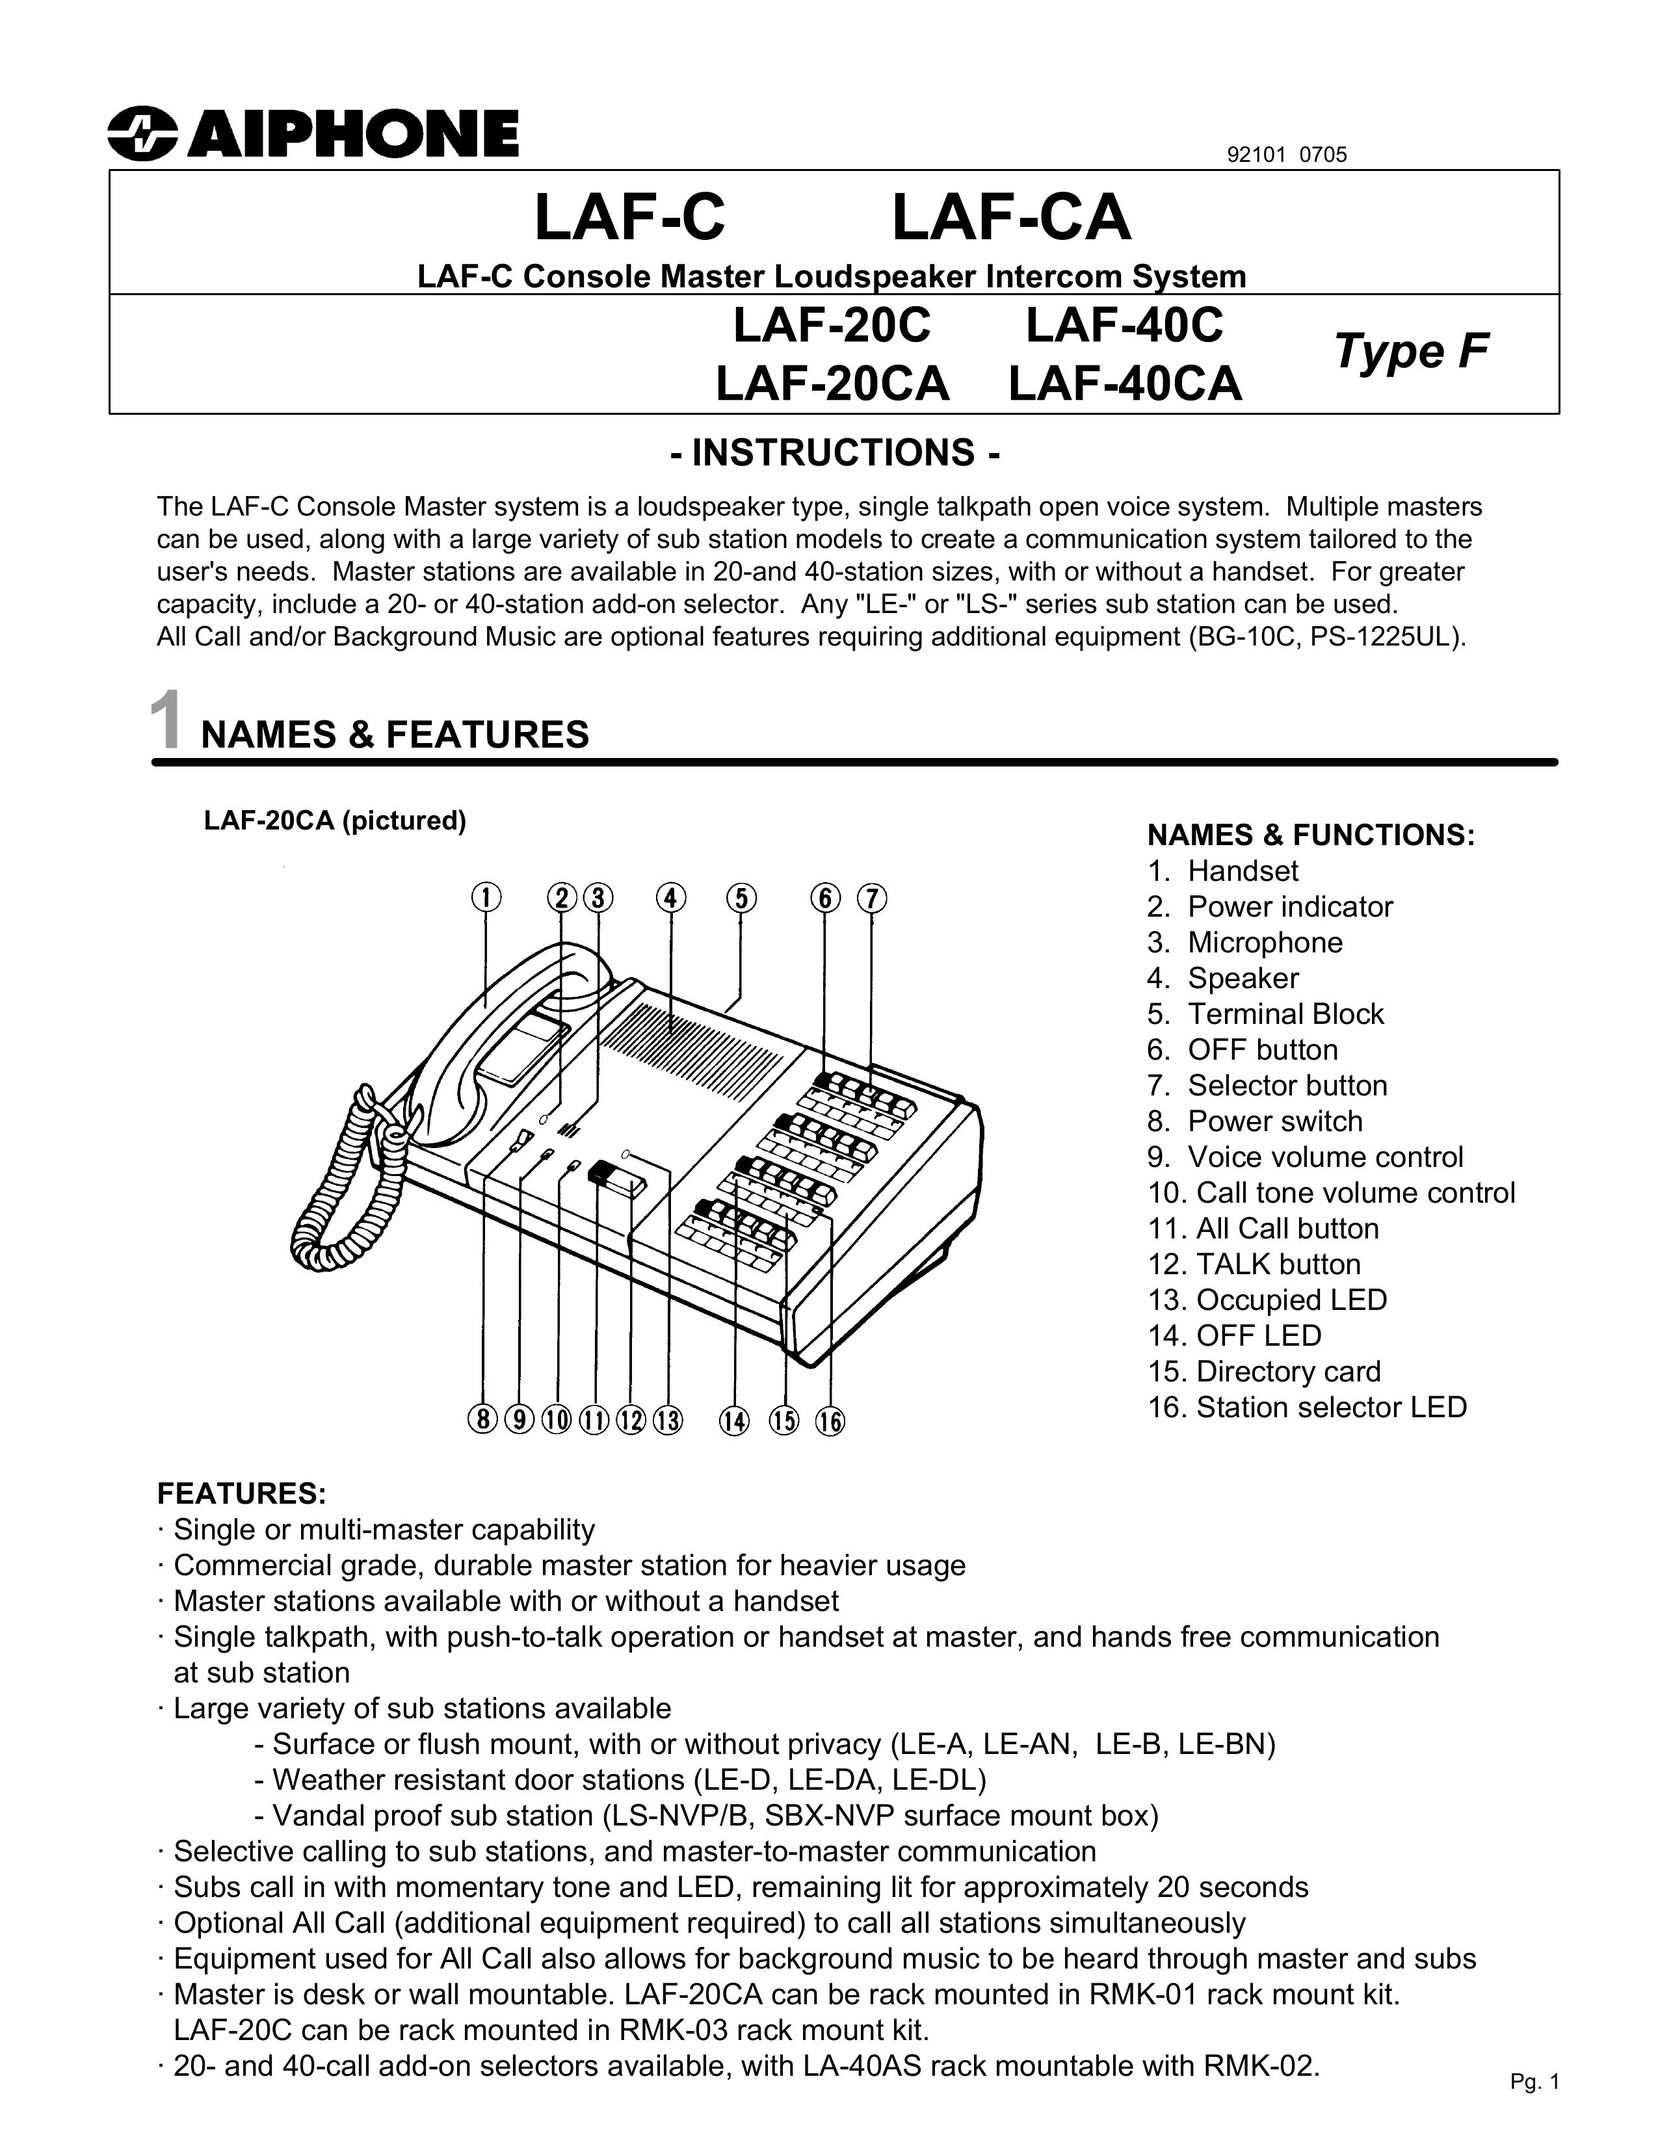 Aiphone LAF-40CA Answering Machine User Manual